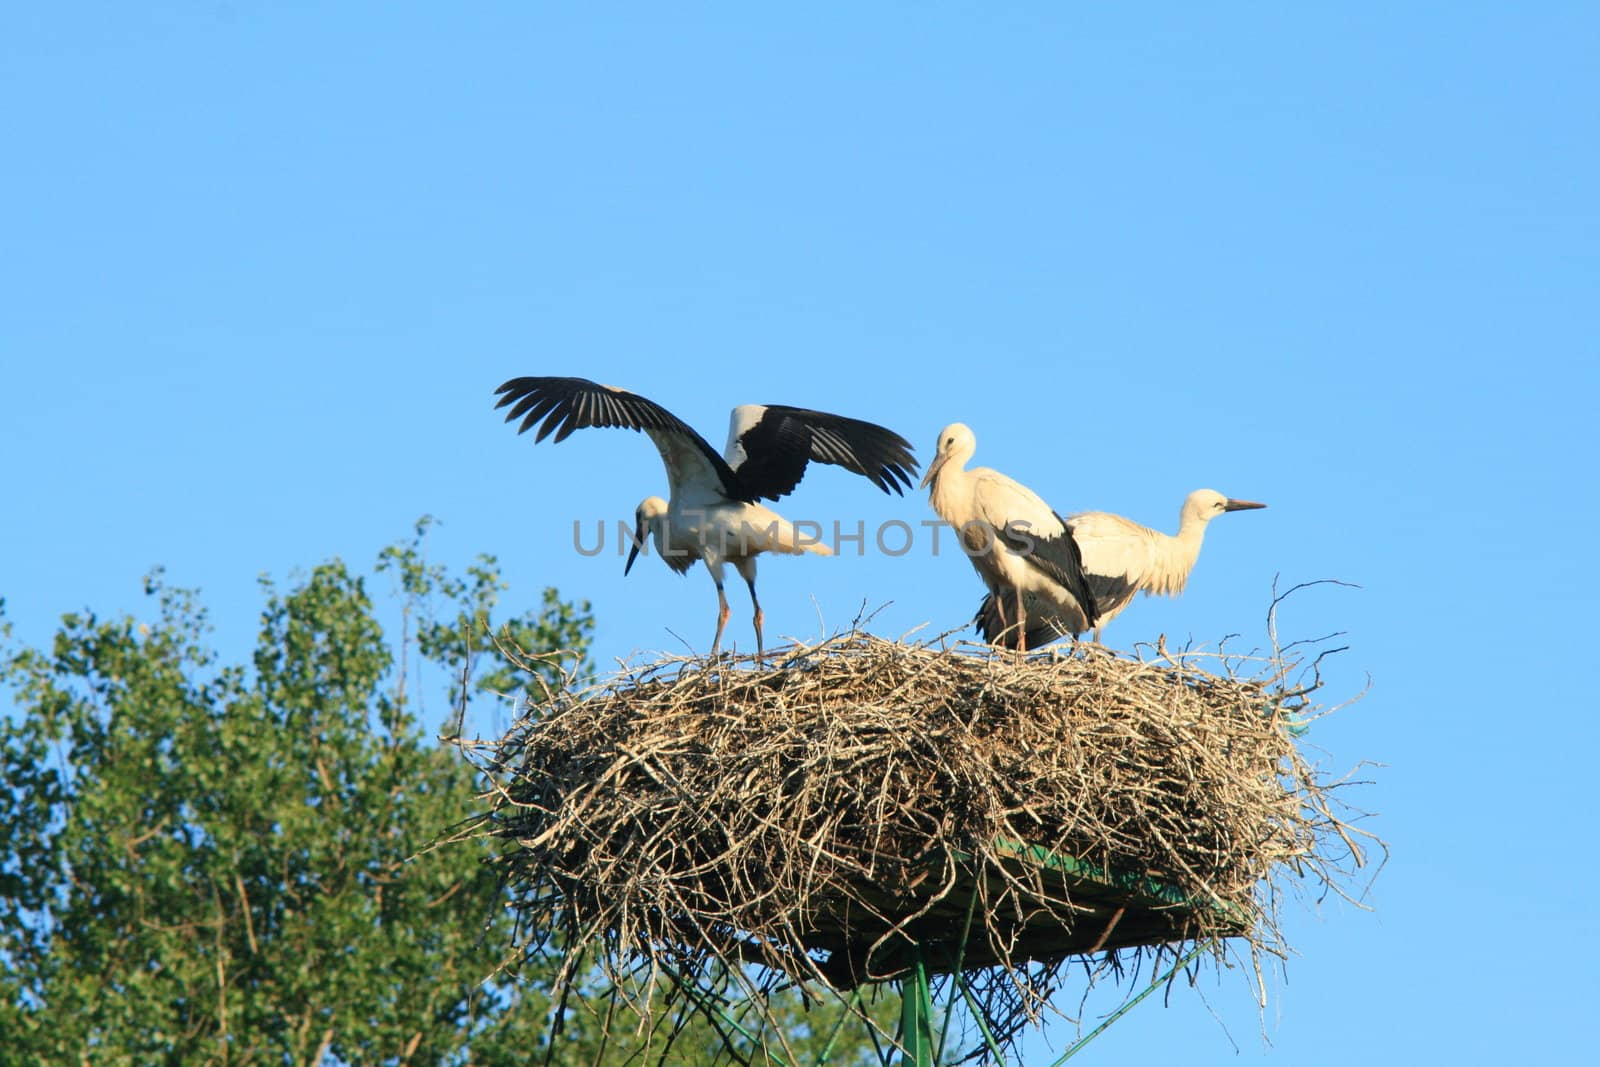 Stork nest by remik44992